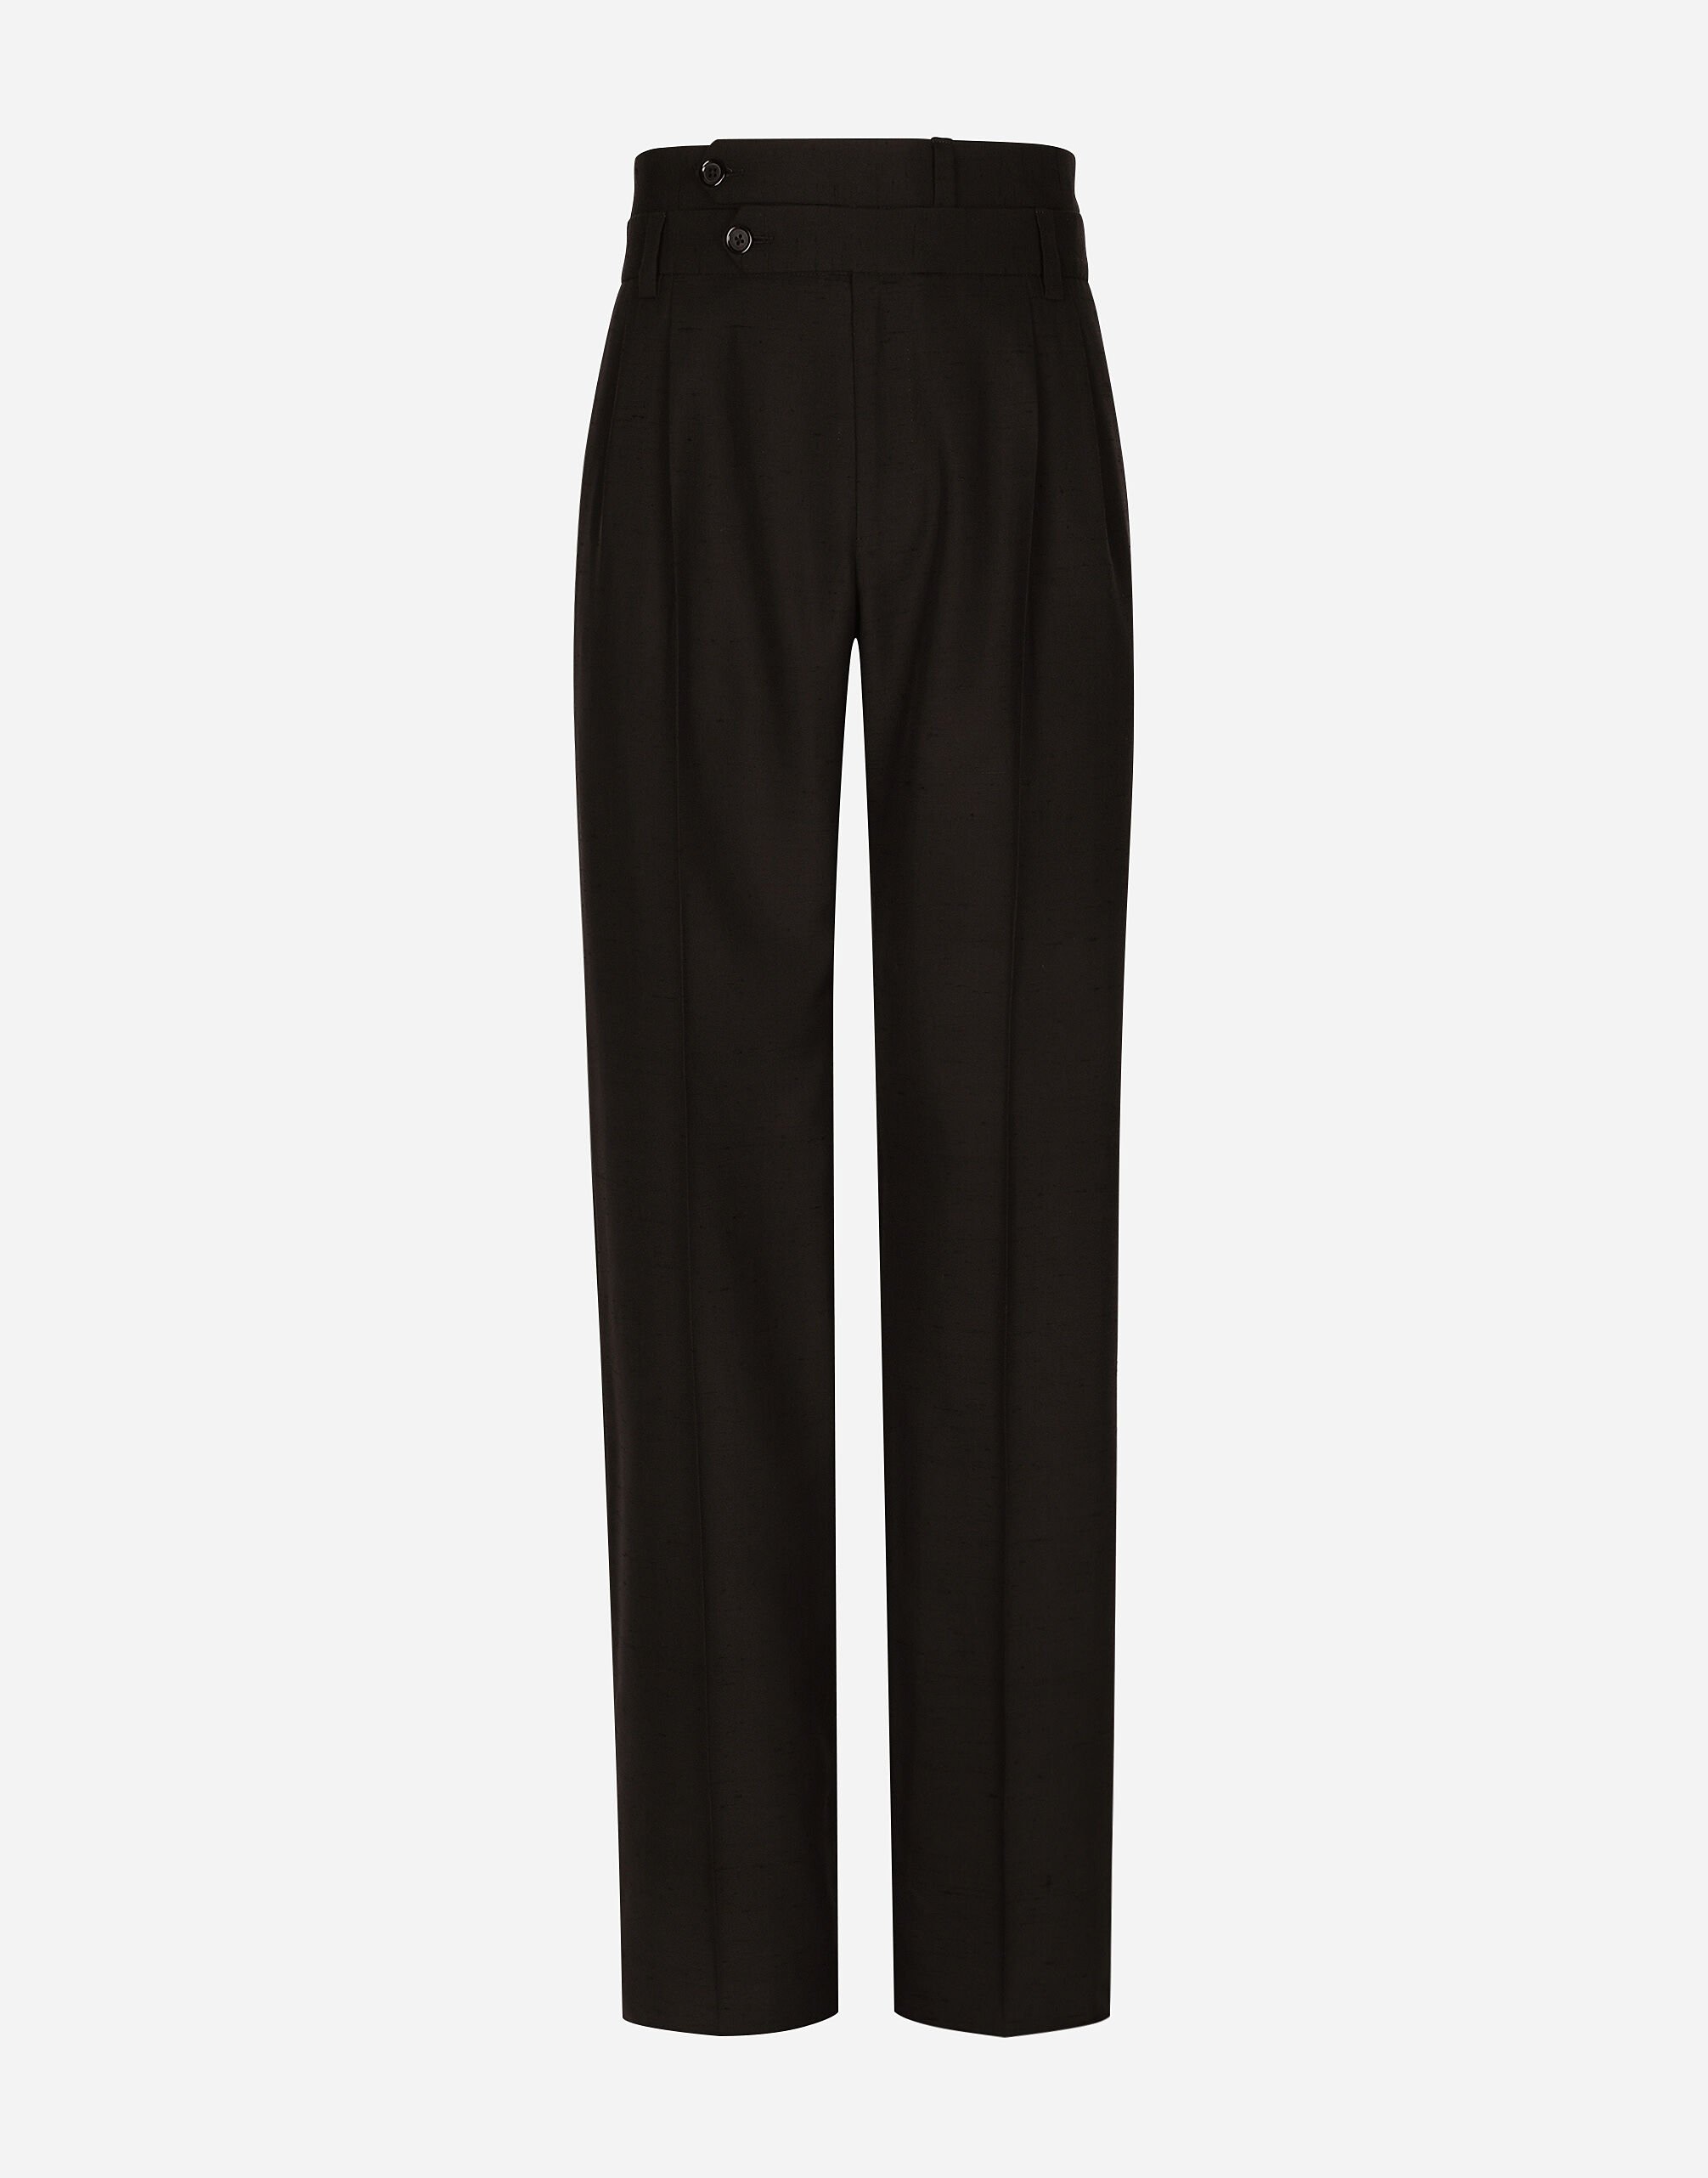 Dolce & Gabbana Pantalón de traje en shantung de algodón y seda Negro G2PQ4TGG150